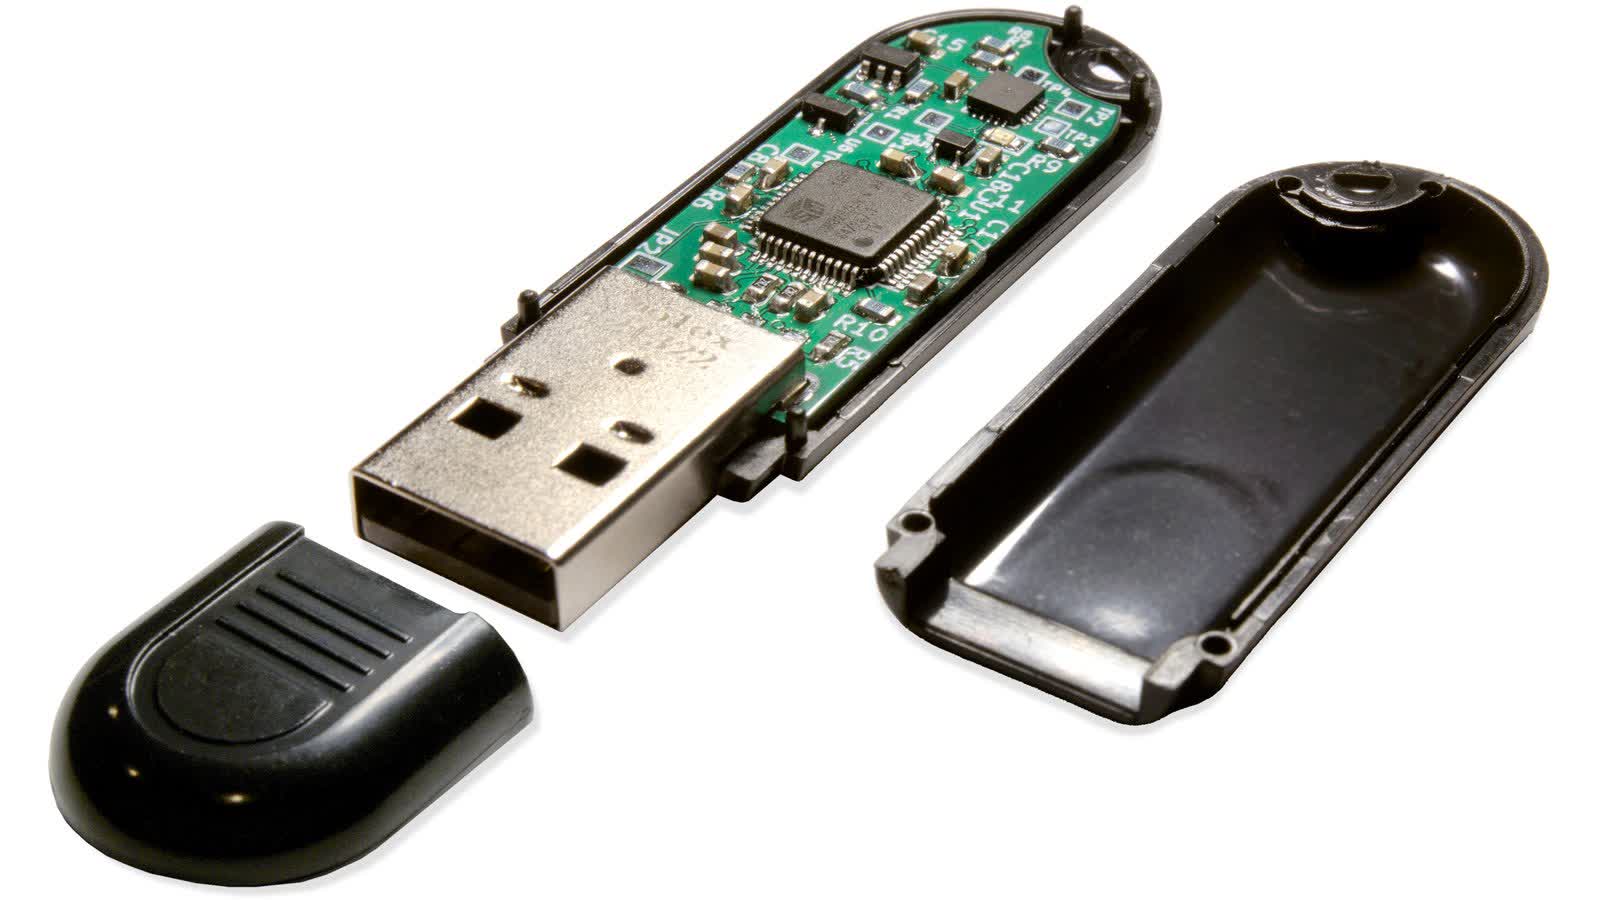 USB drive that self-destructs nears its crowdfunding goal